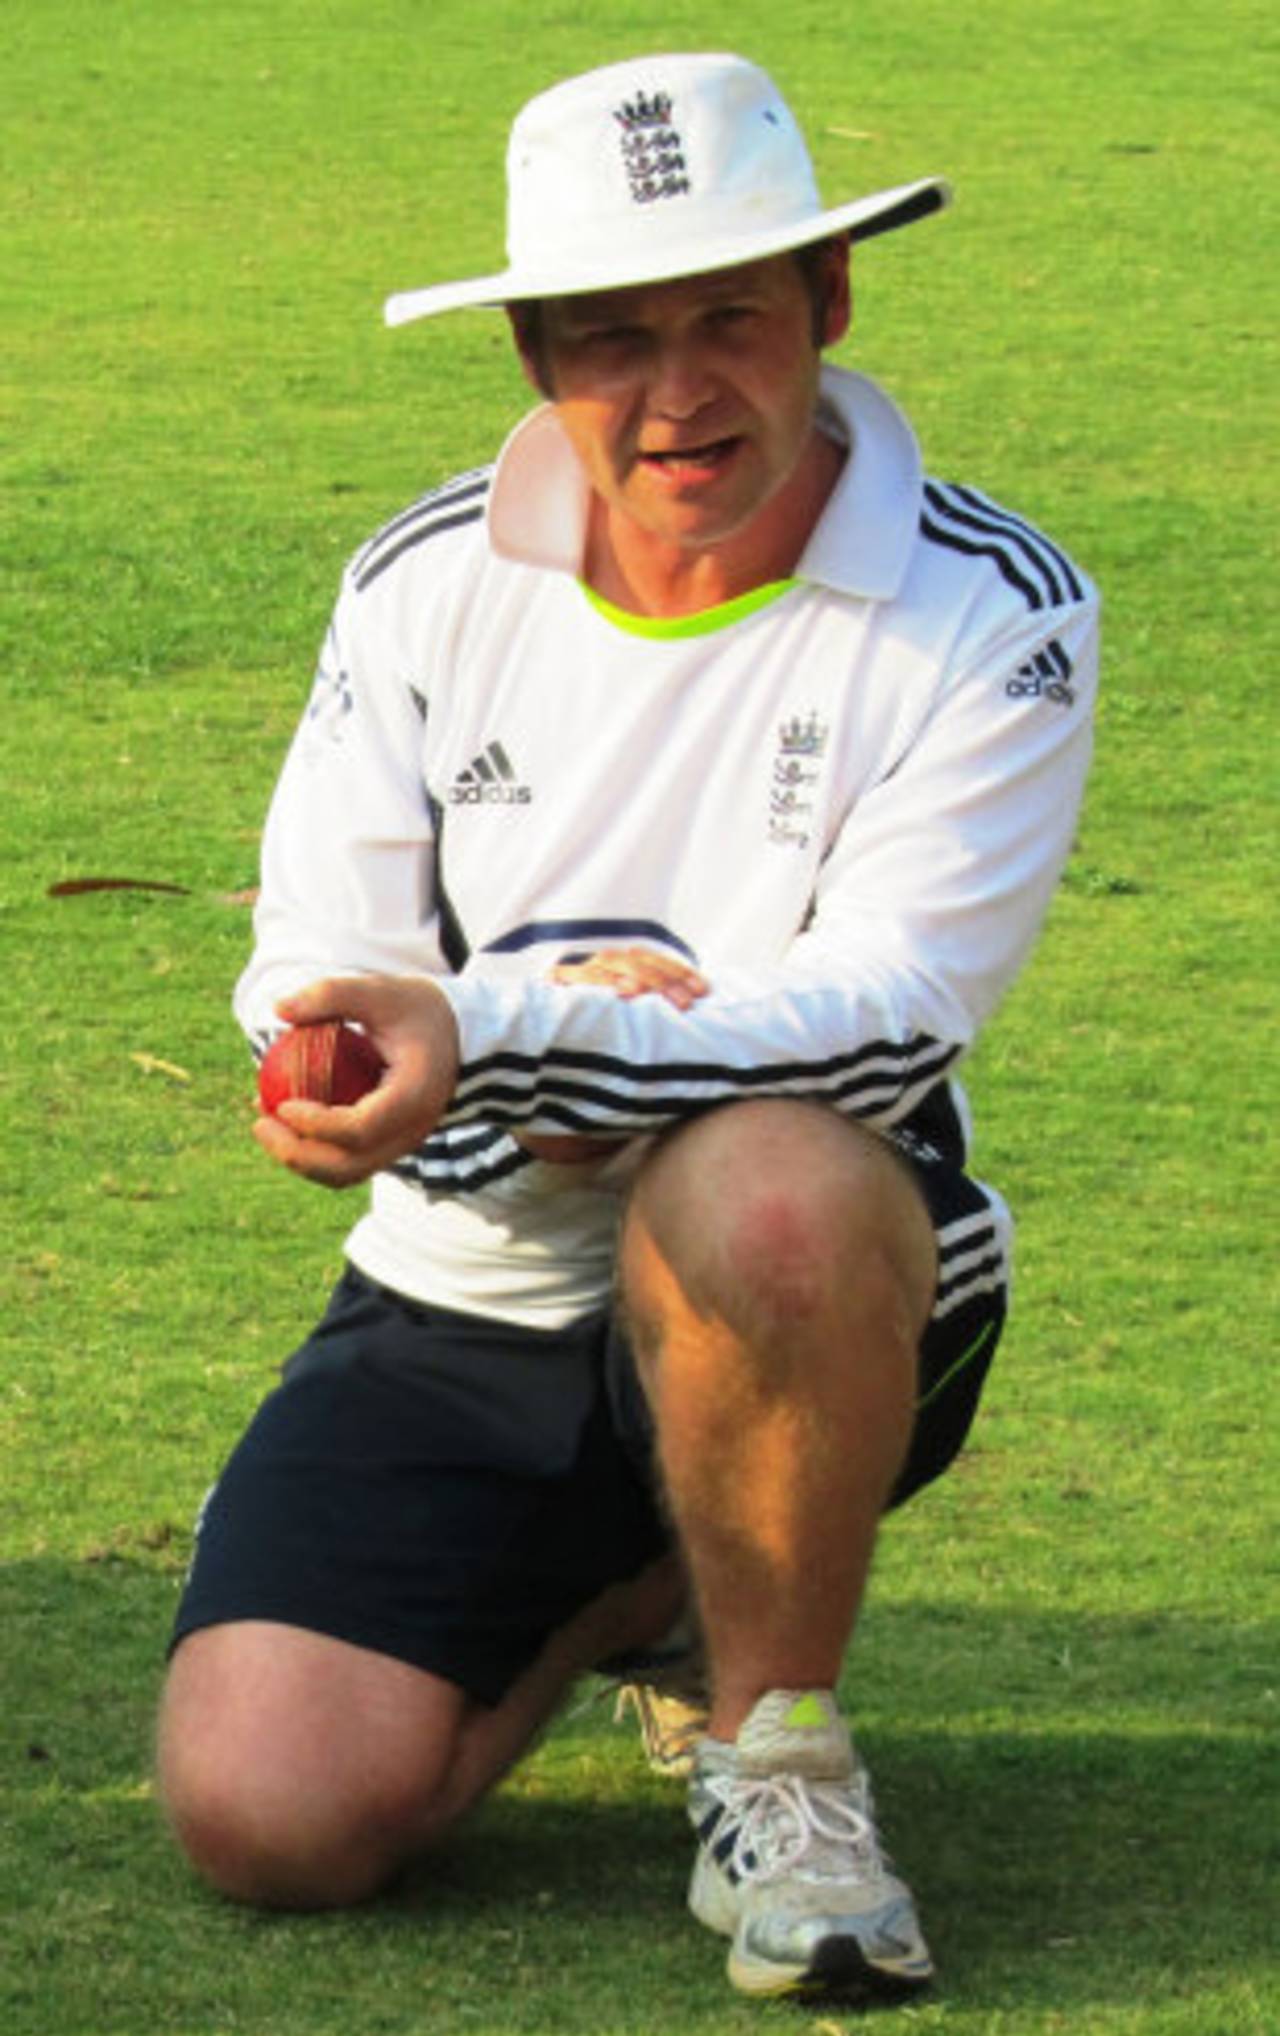 Paul Shaw has worked in England Women's cricket for several years&nbsp;&nbsp;&bull;&nbsp;&nbsp;ECB